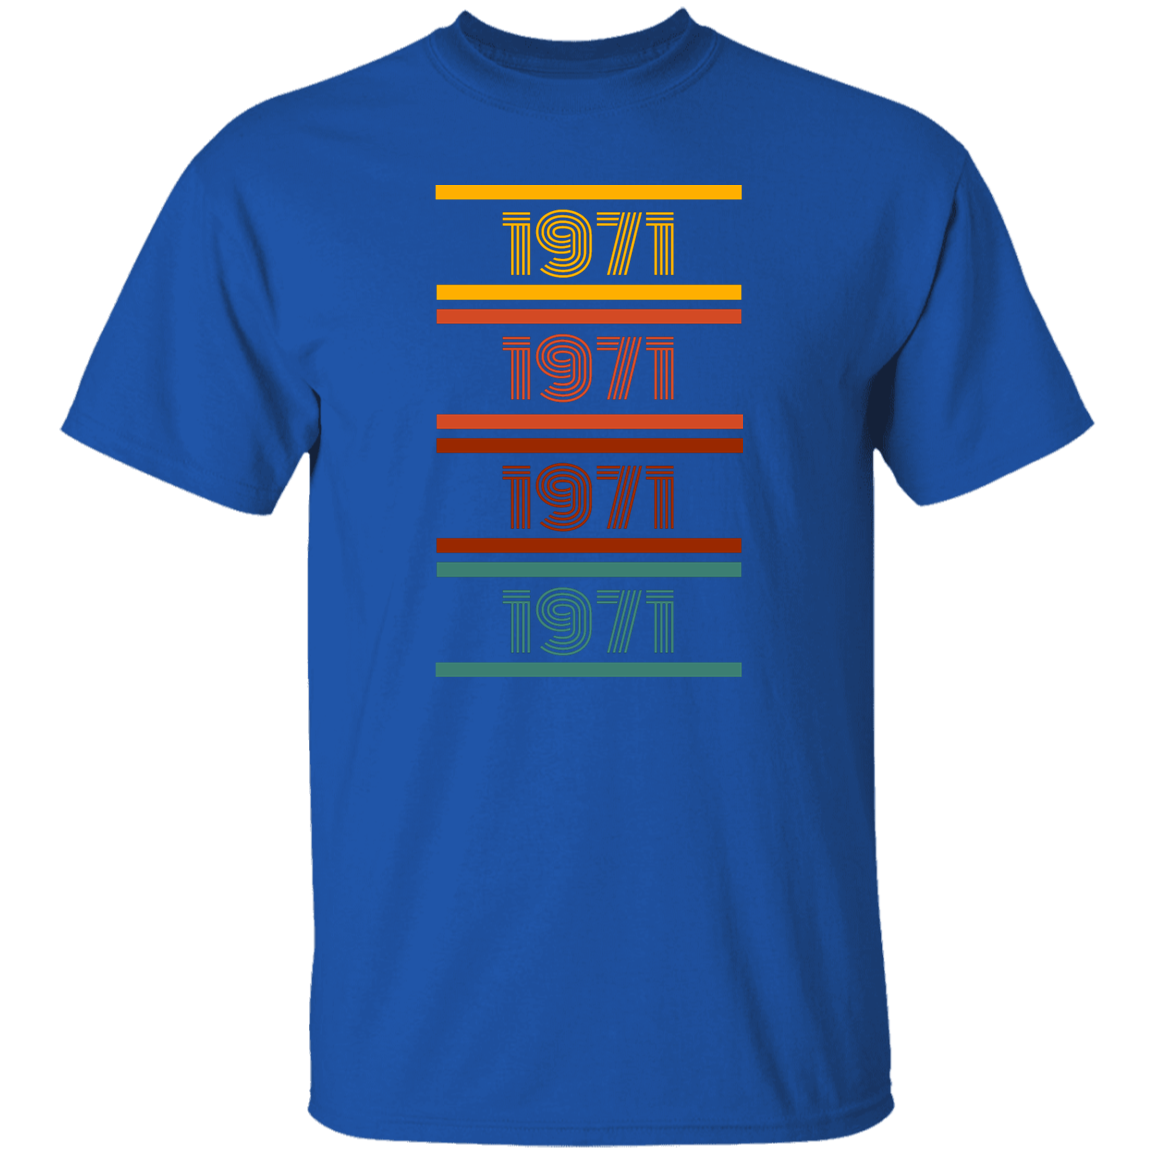 1971 5.3 oz. T-Shirt